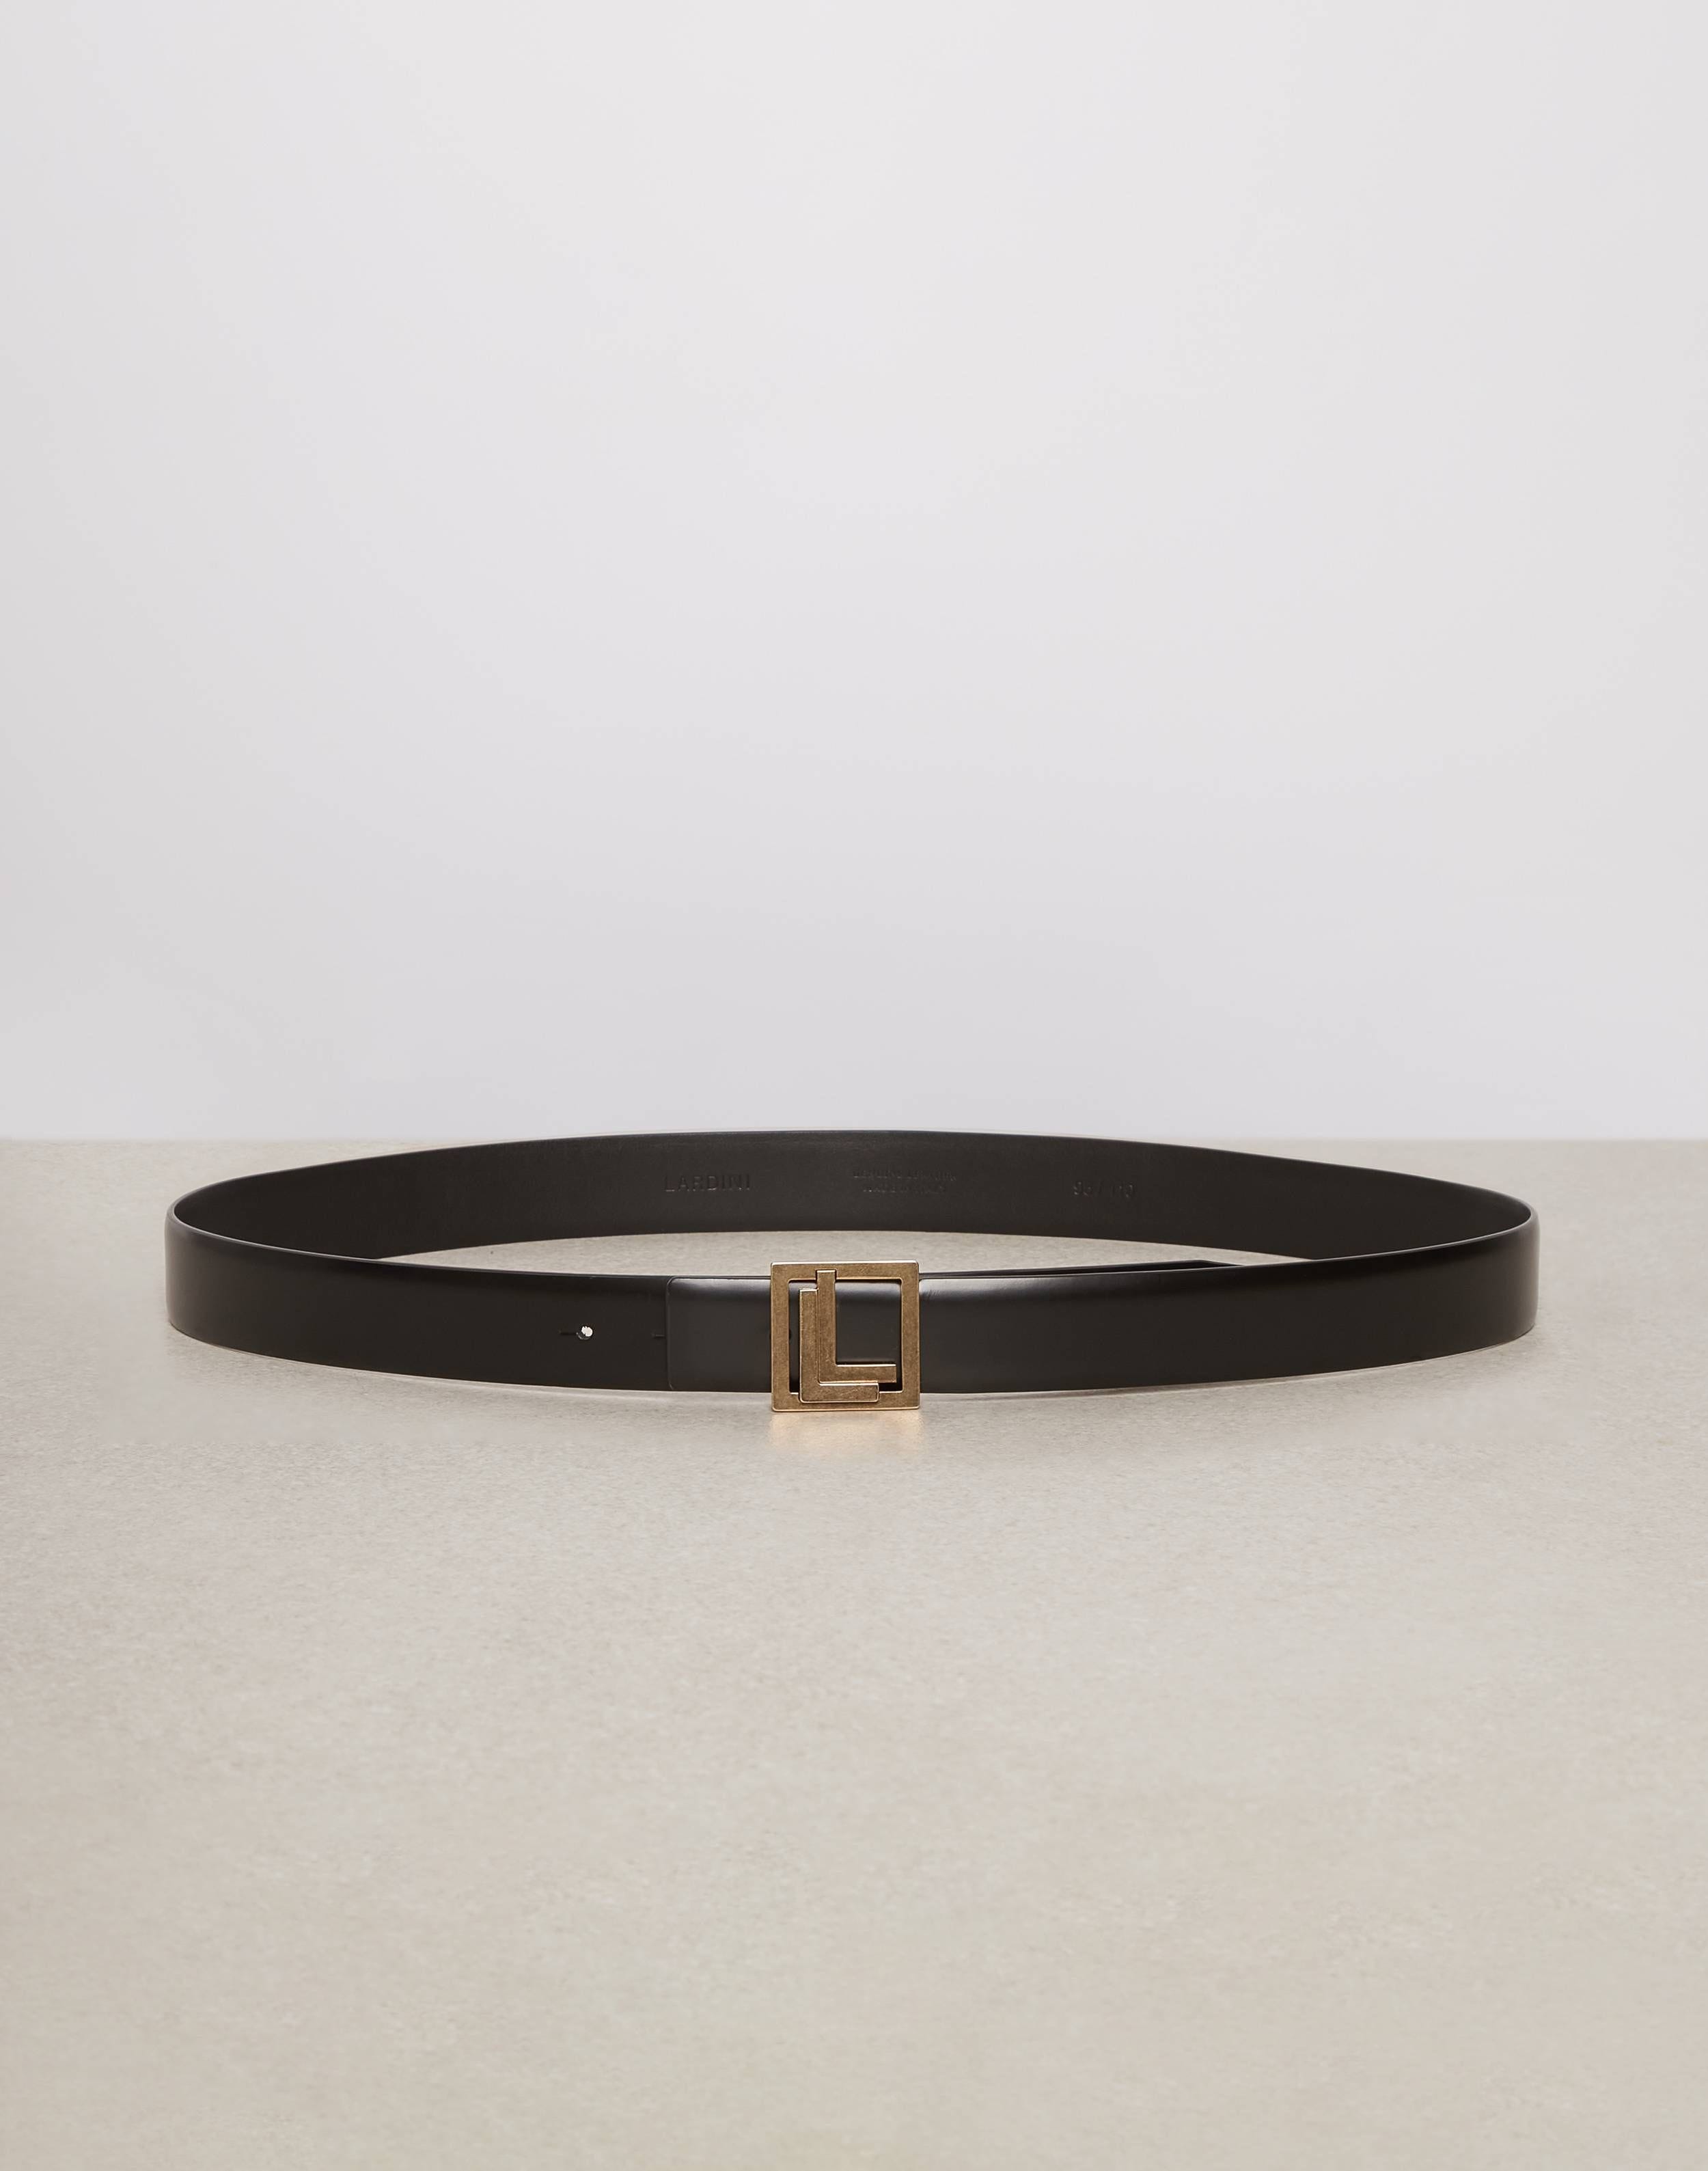 Black belt with double L monogram in brass